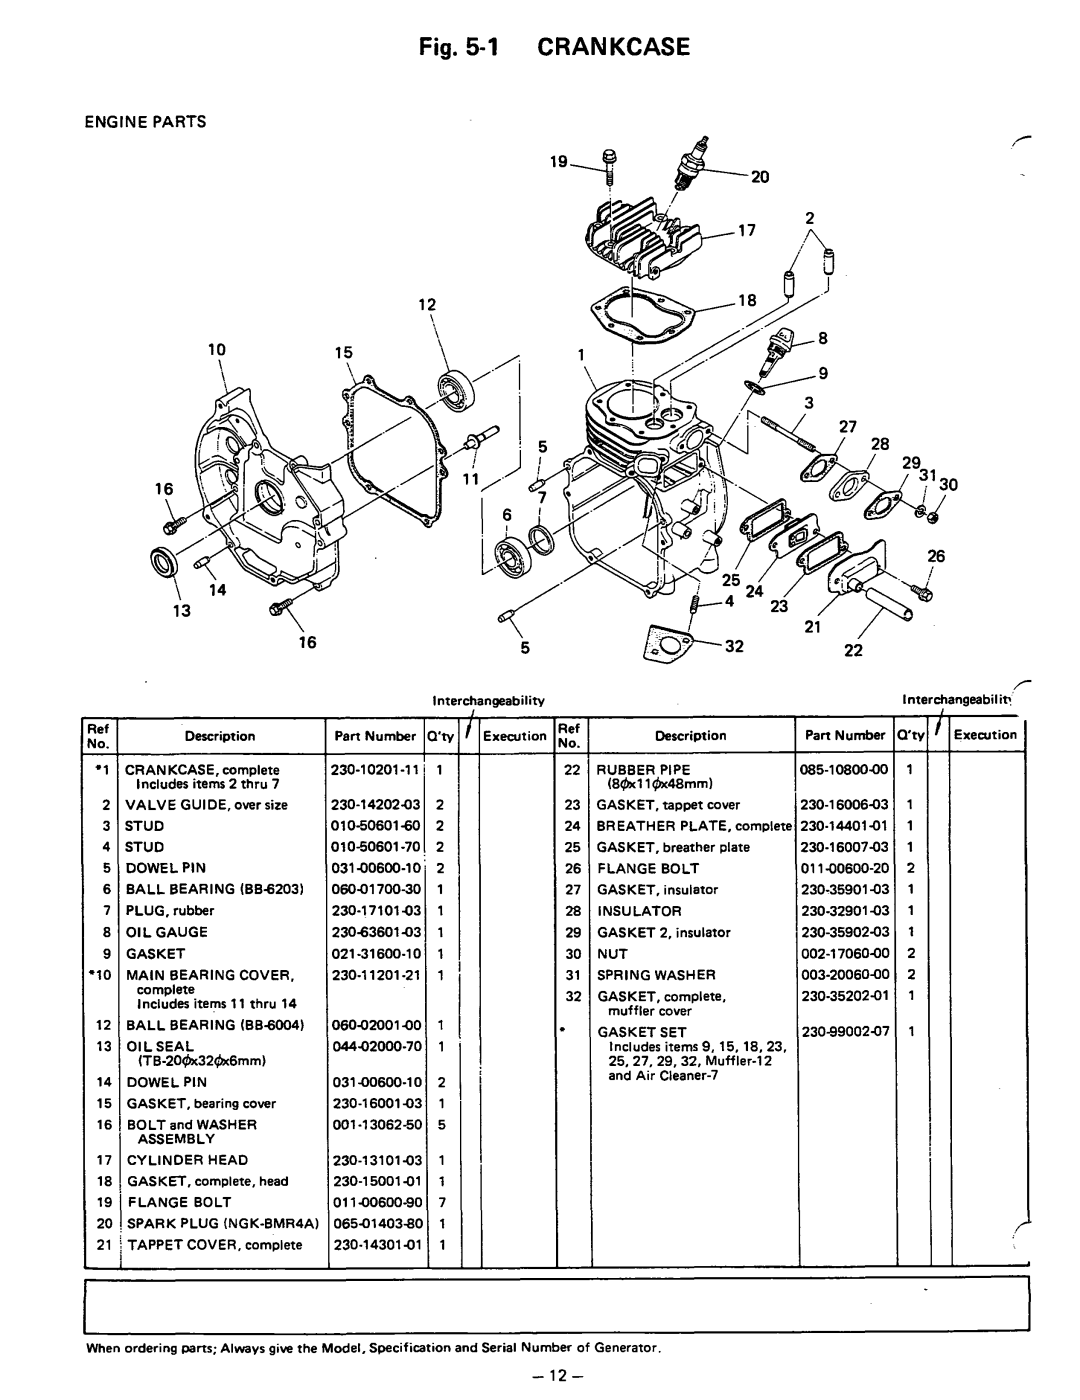 Subaru Robin Power Products R650 manual 1CRANKCASE, Engine Parts, 1015 